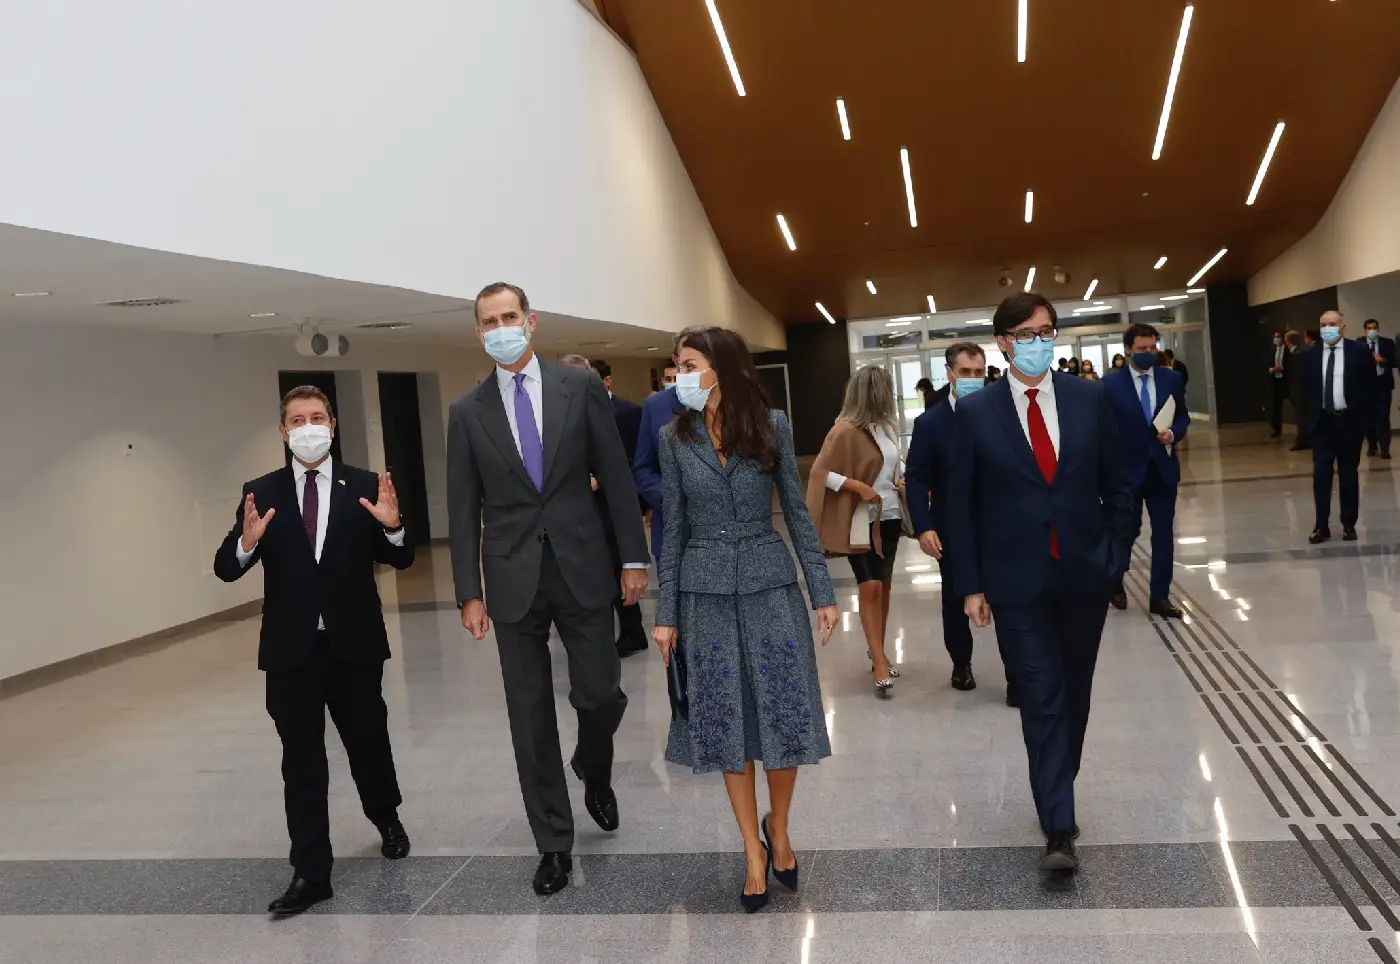 Queen Letizia in Felipe Varela blue tweed suit to visit the new Toledo University Hospital